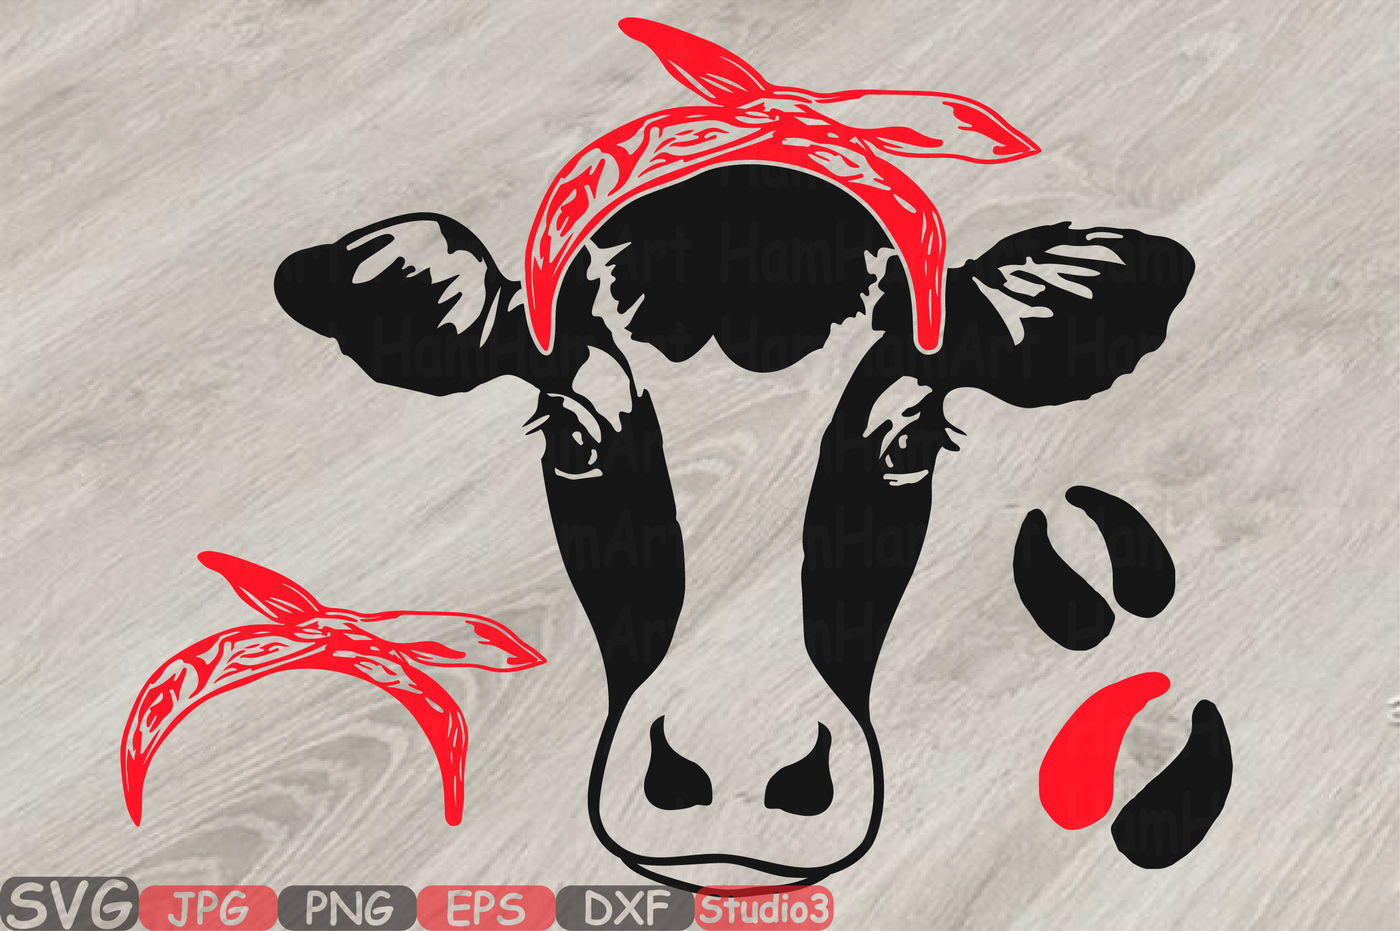 Cow Head whit Bandana Silhouette SVG cowboy western Farm Milk 813S By